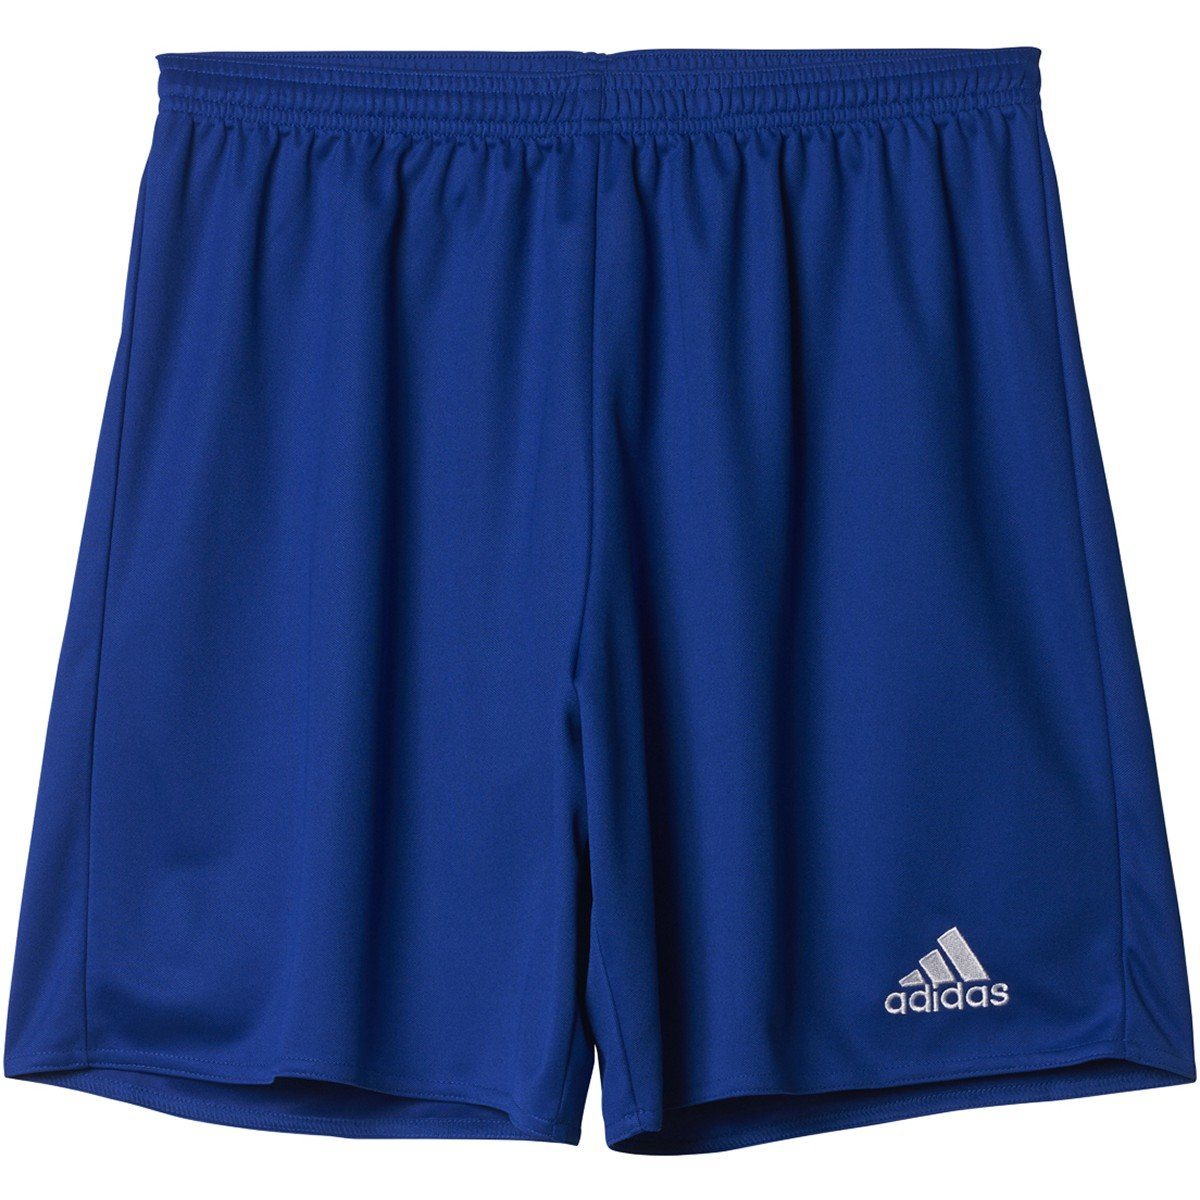 adidas Men's Parma 16 Short Team Shorts adidas Bold Blue/White X-Small 